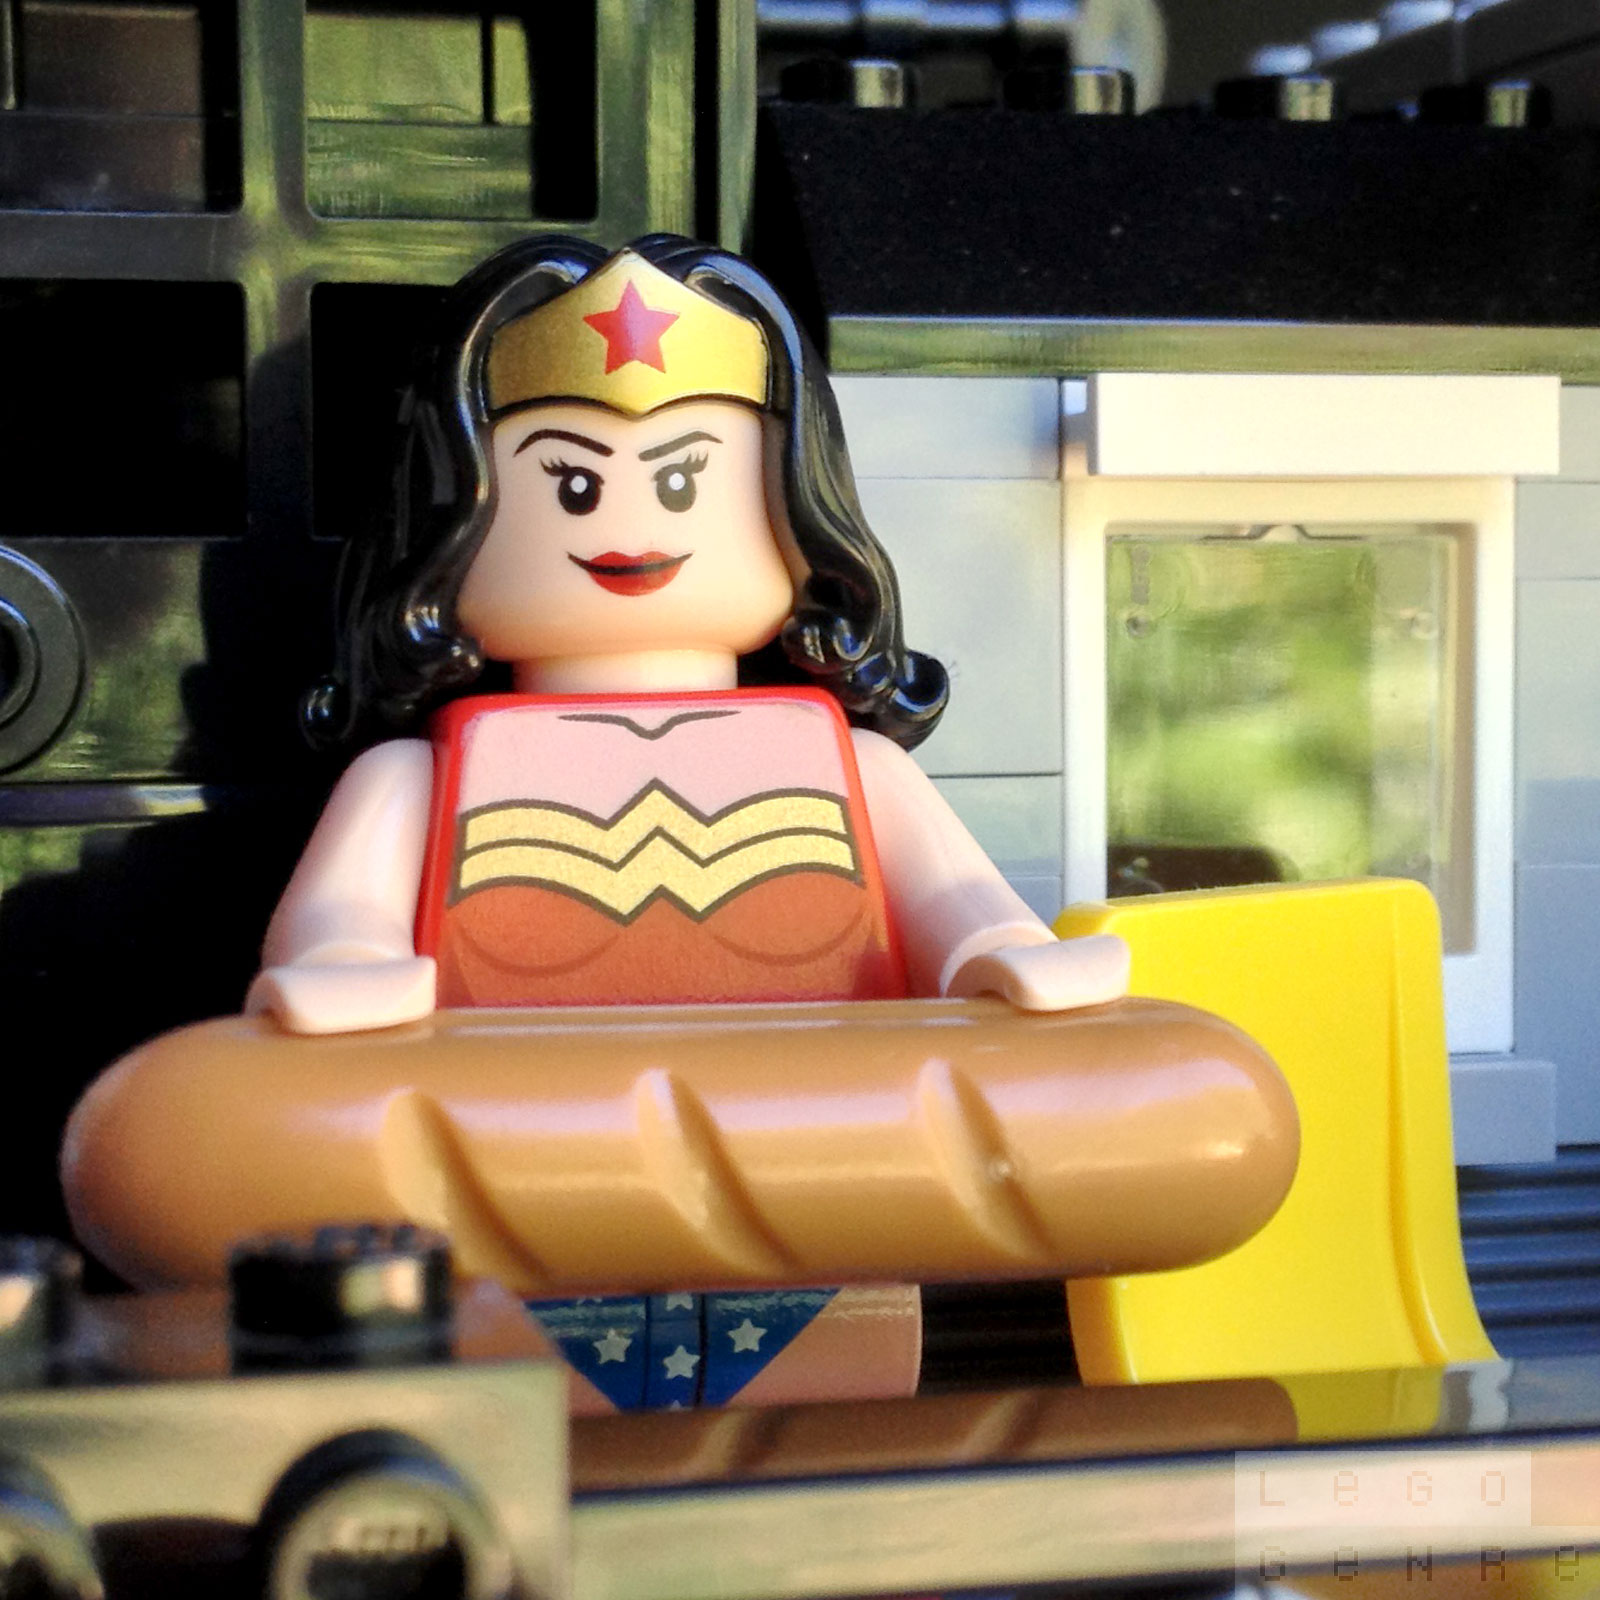 LegoGenre 00280: Wonder Woman's Wonder Bread